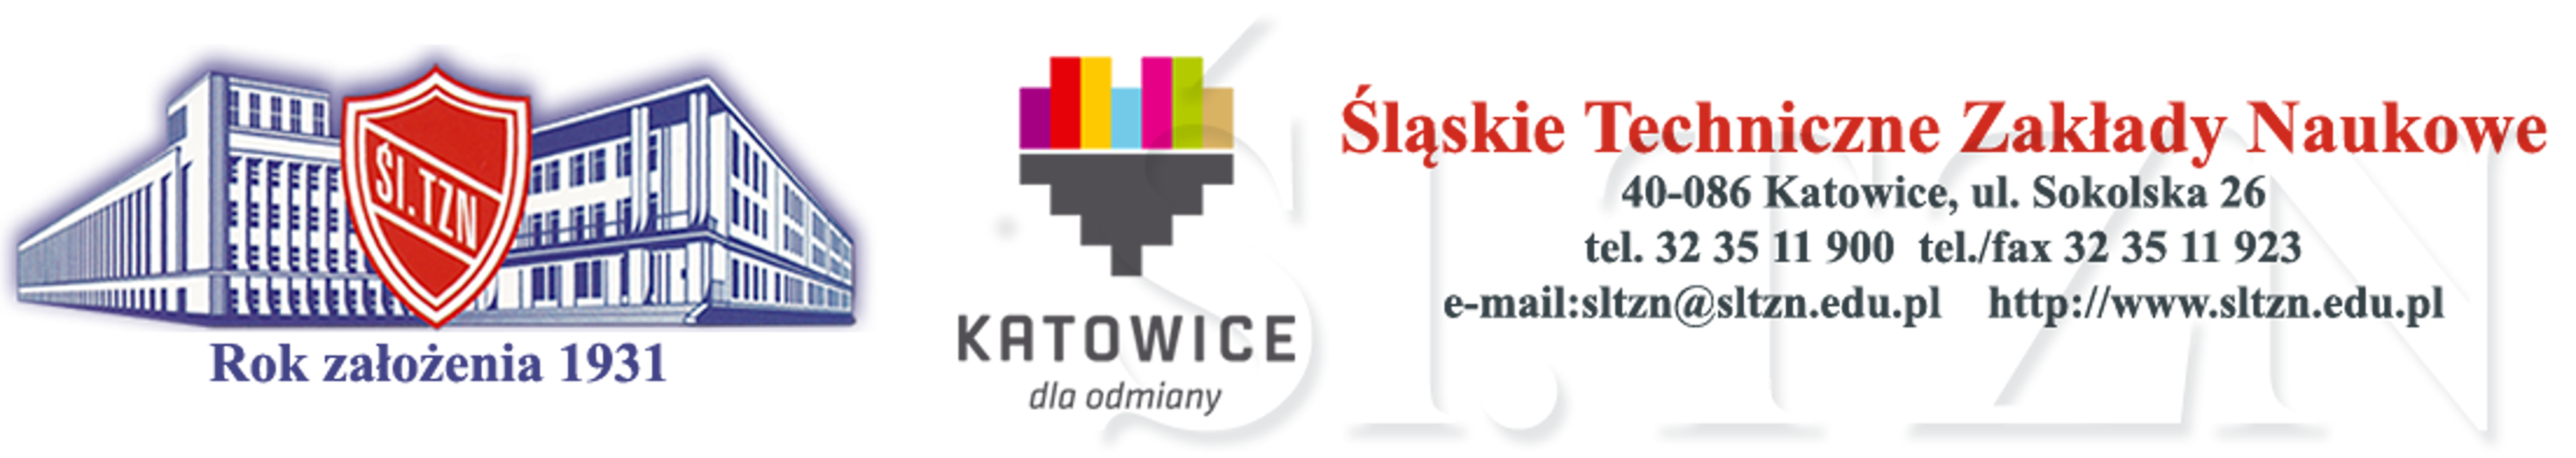 sltzn logo3